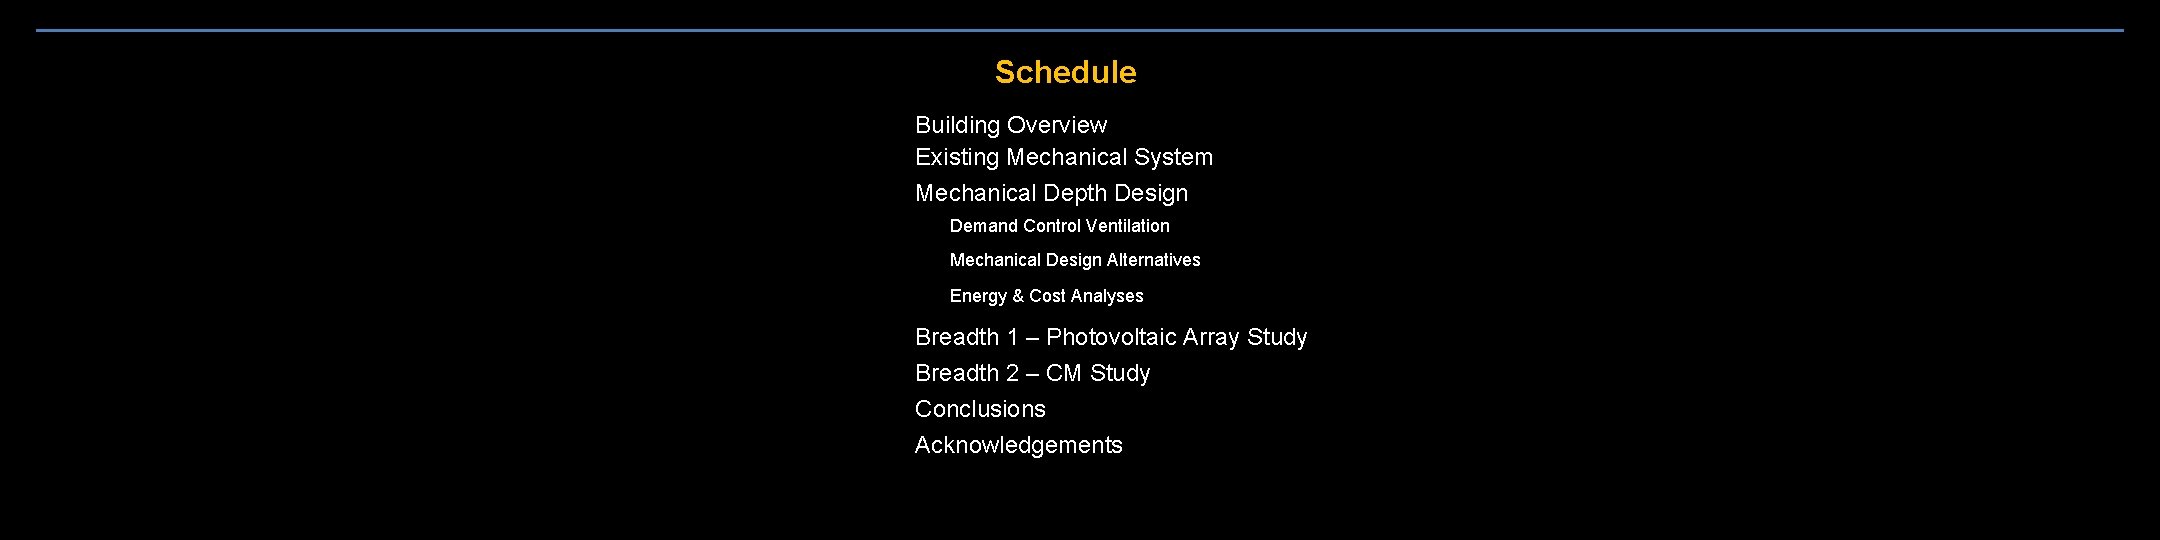 Schedule Building Overview Existing Mechanical System Mechanical Depth Design Demand Control Ventilation Mechanical Design